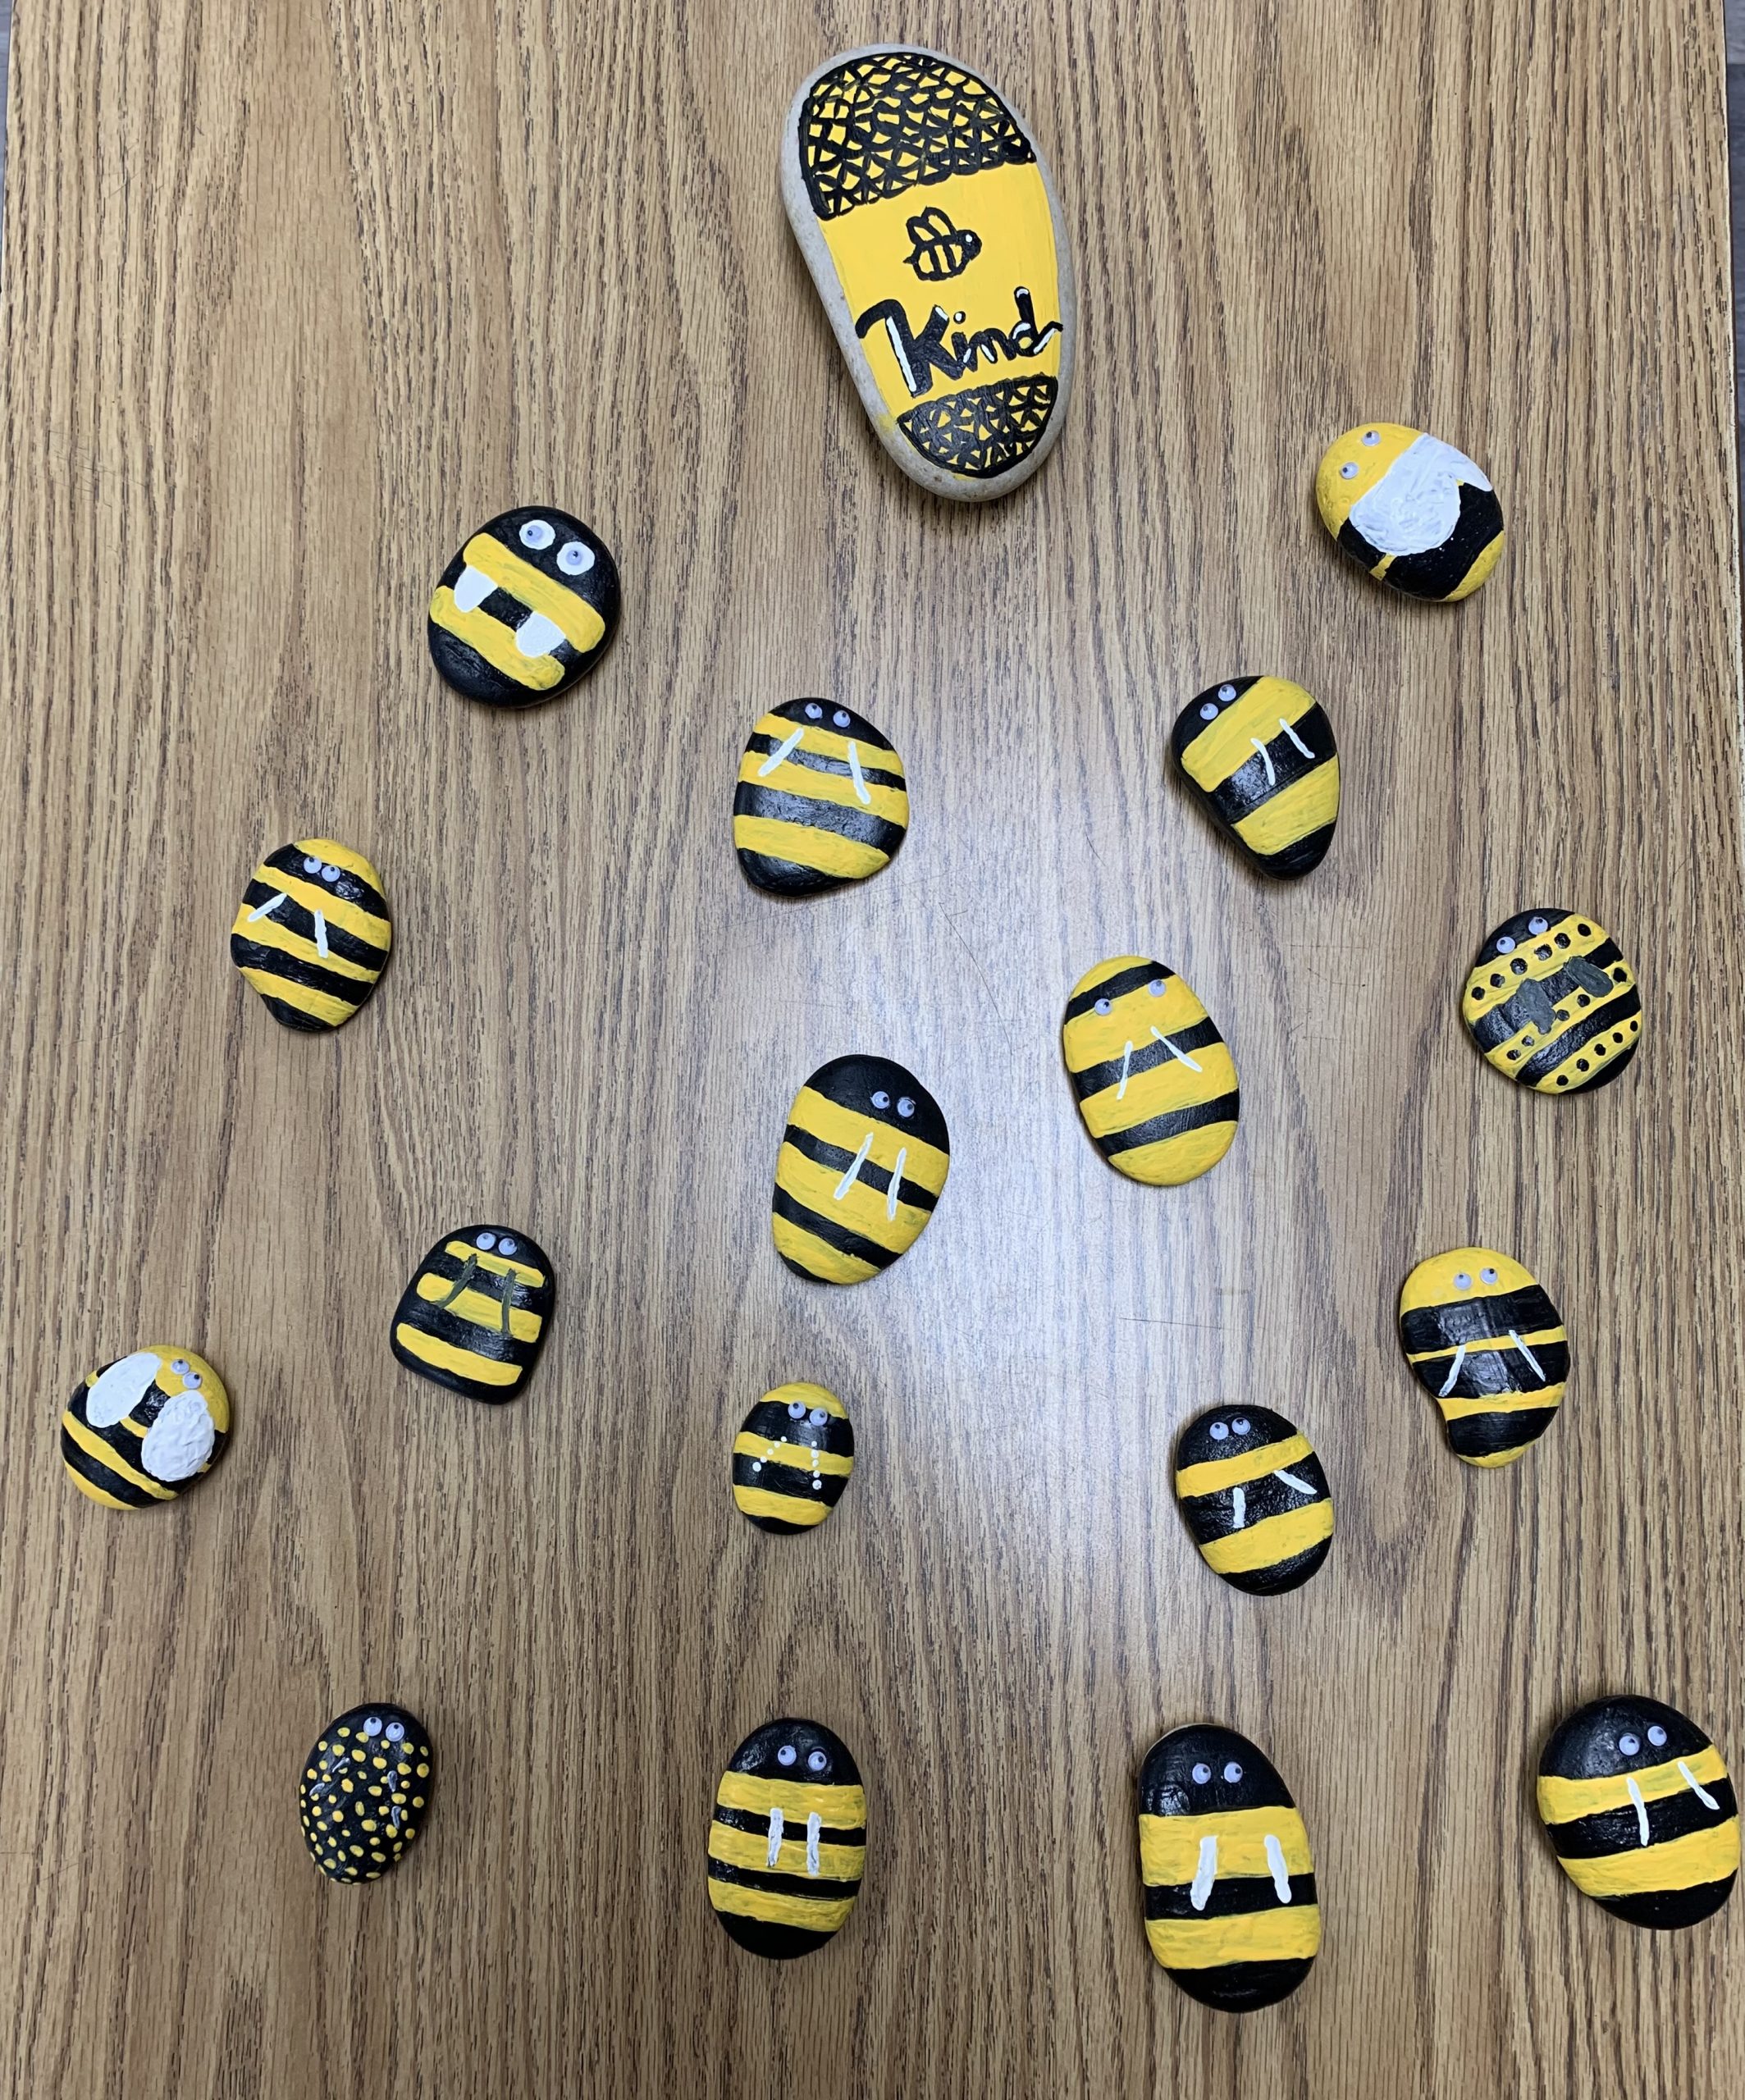 A whole class of bee rocks!